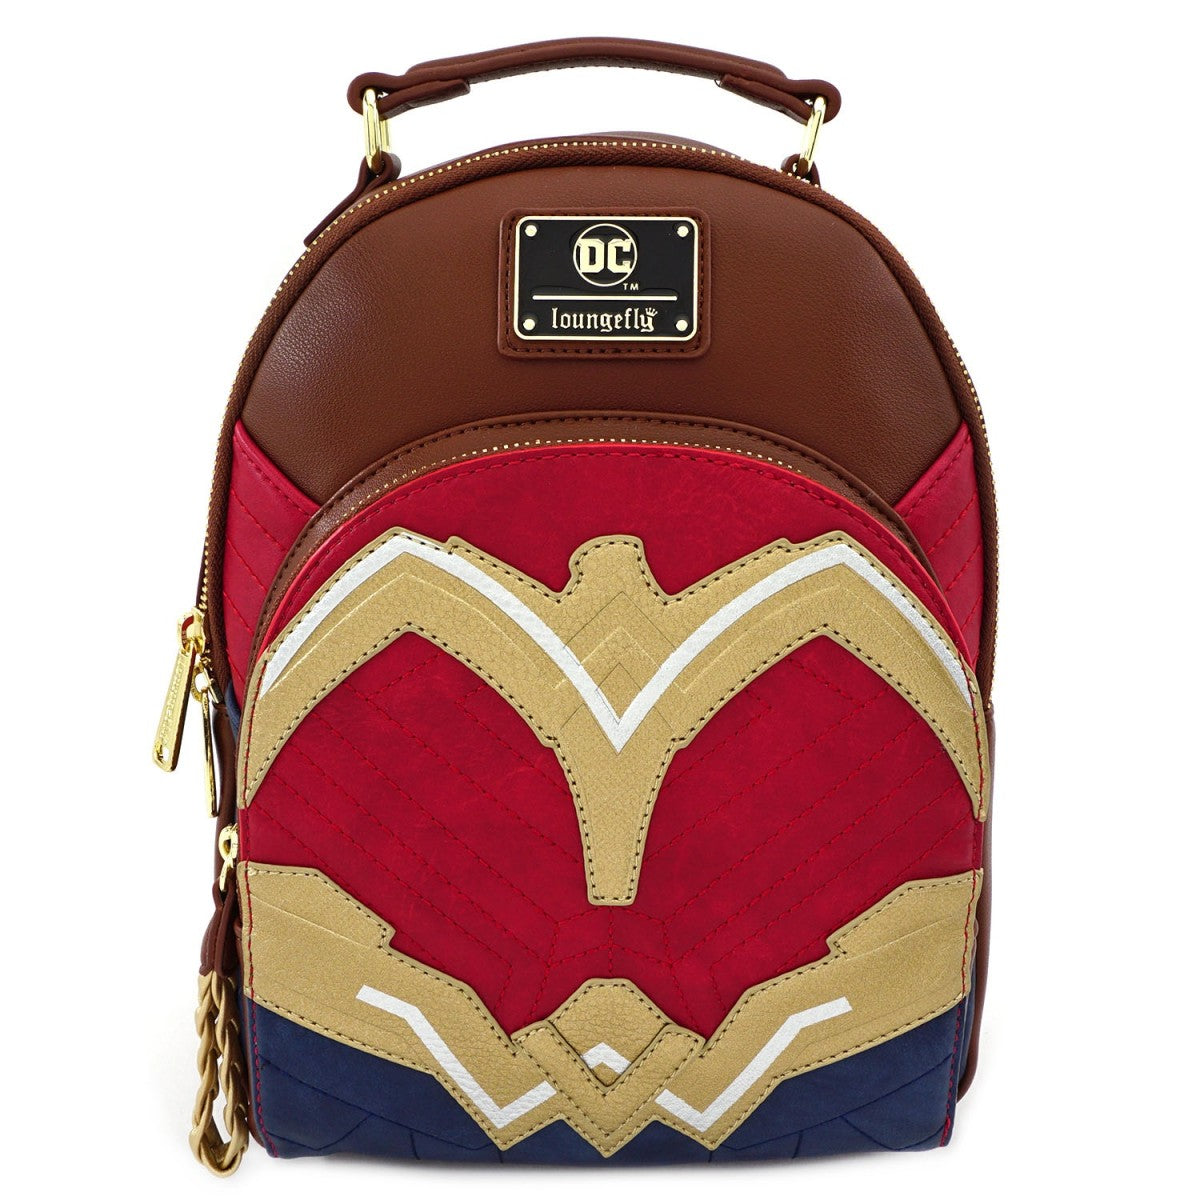 Loungefly x DC Wonder Woman Mini Backpack